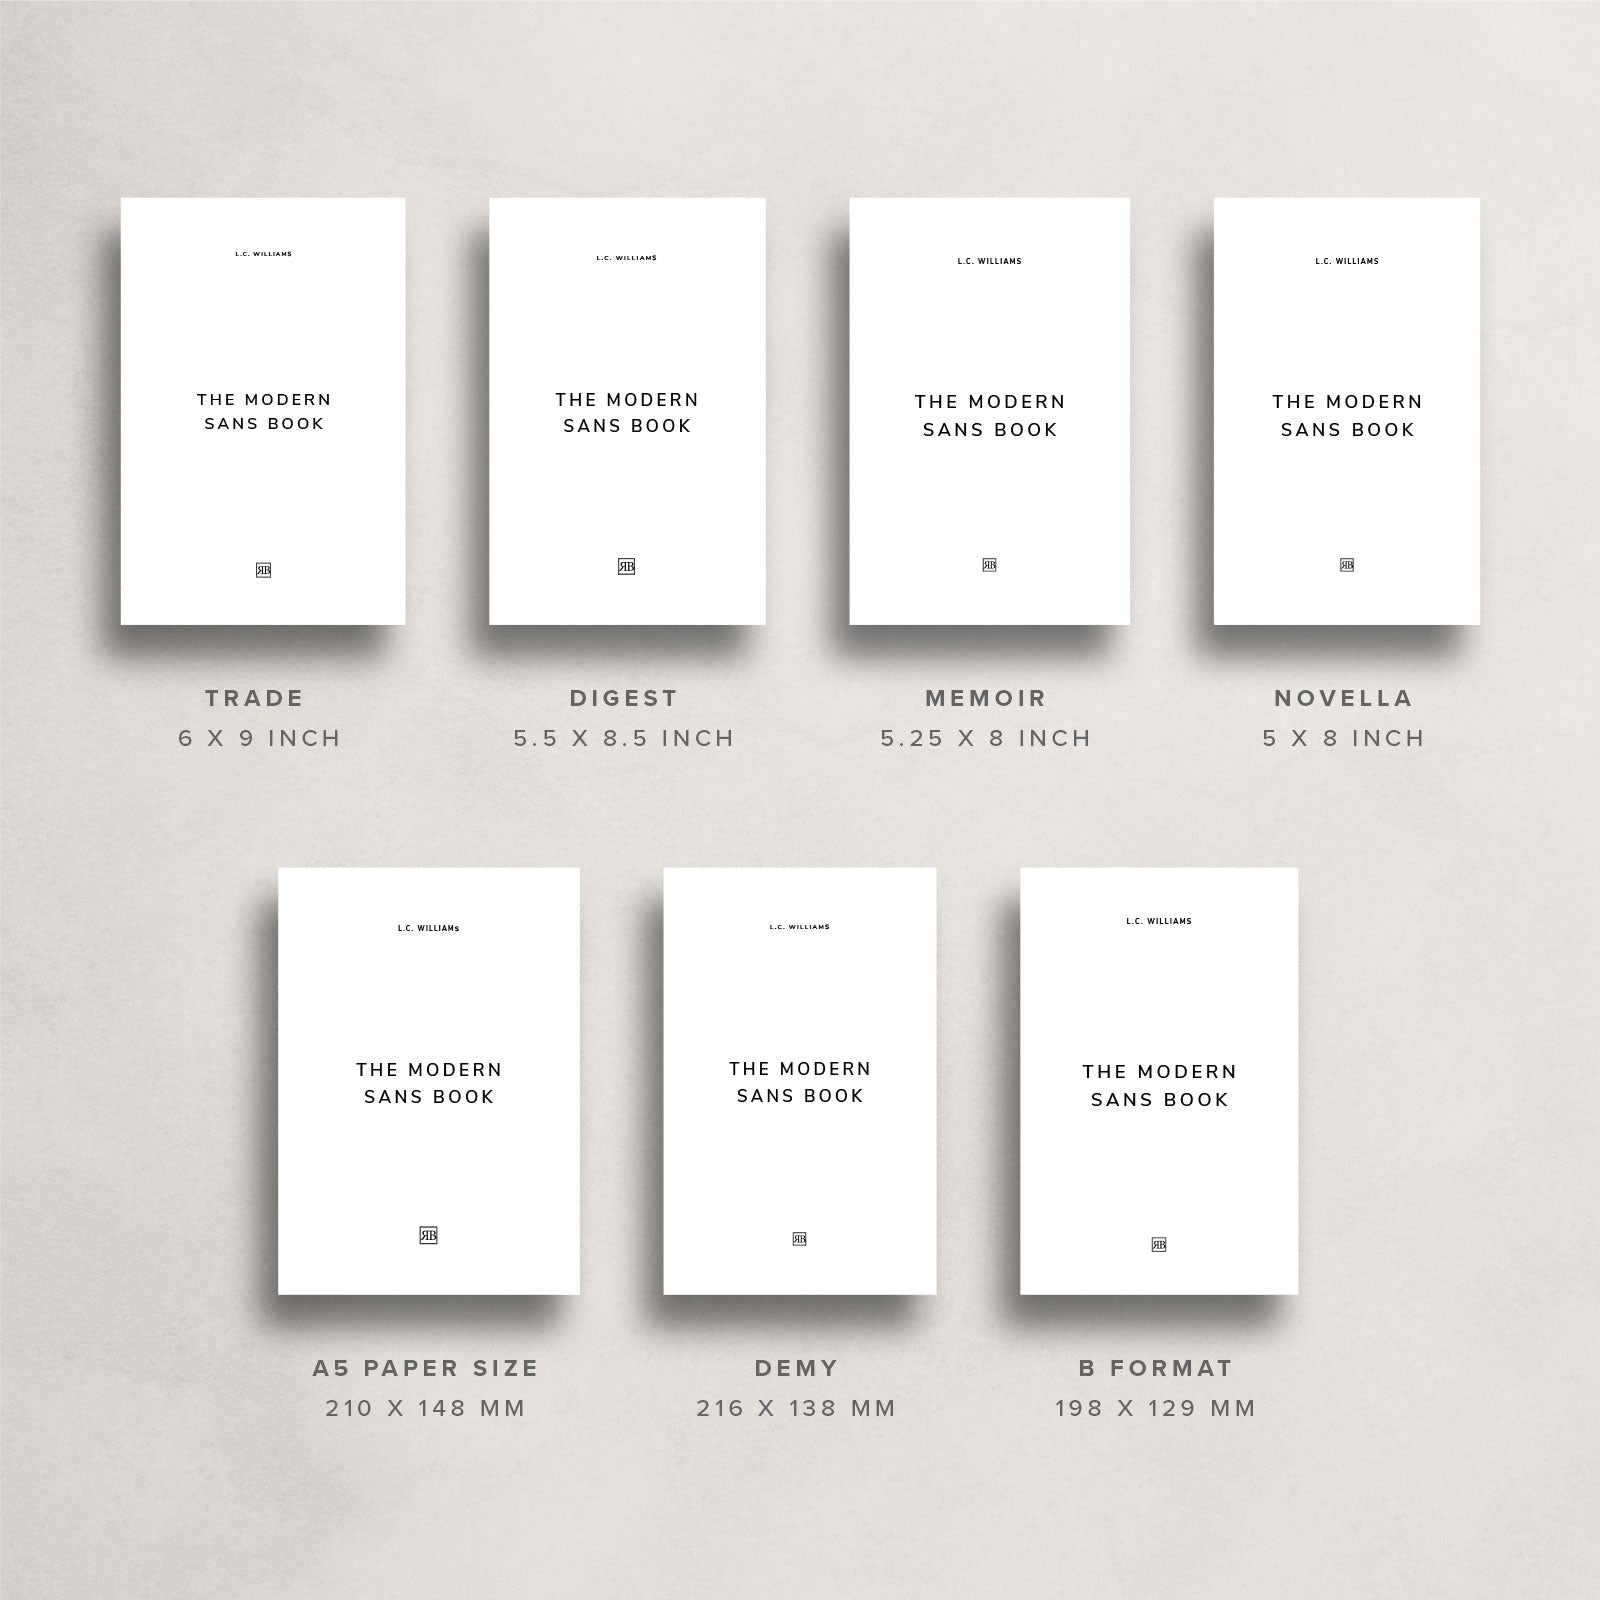 Modern Sans Book Template – Ruben Stom Design